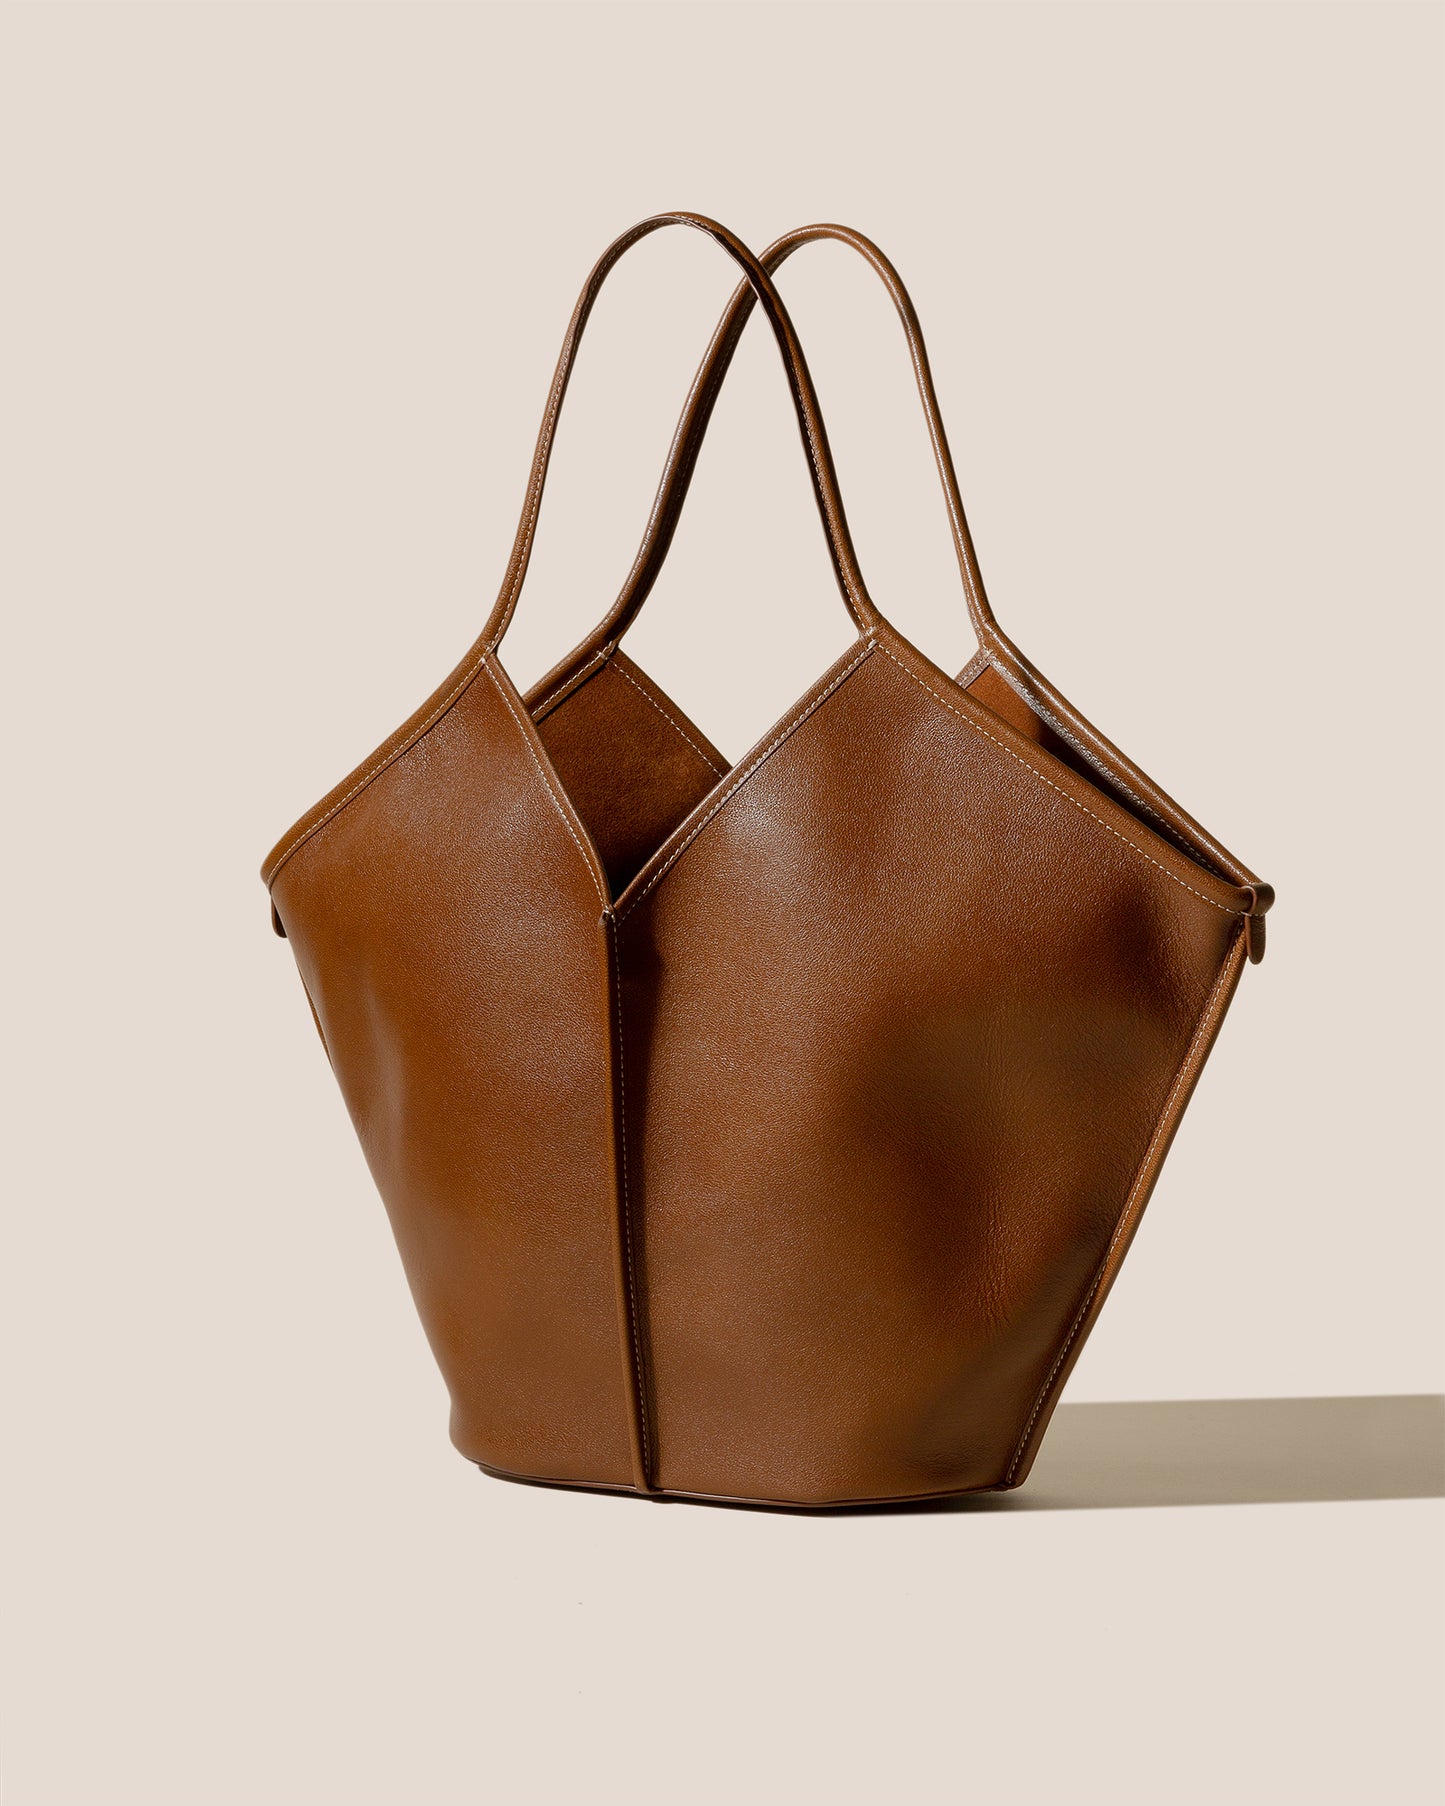 HEREU Calella Leather-Trimmed Canvas Tote Bag